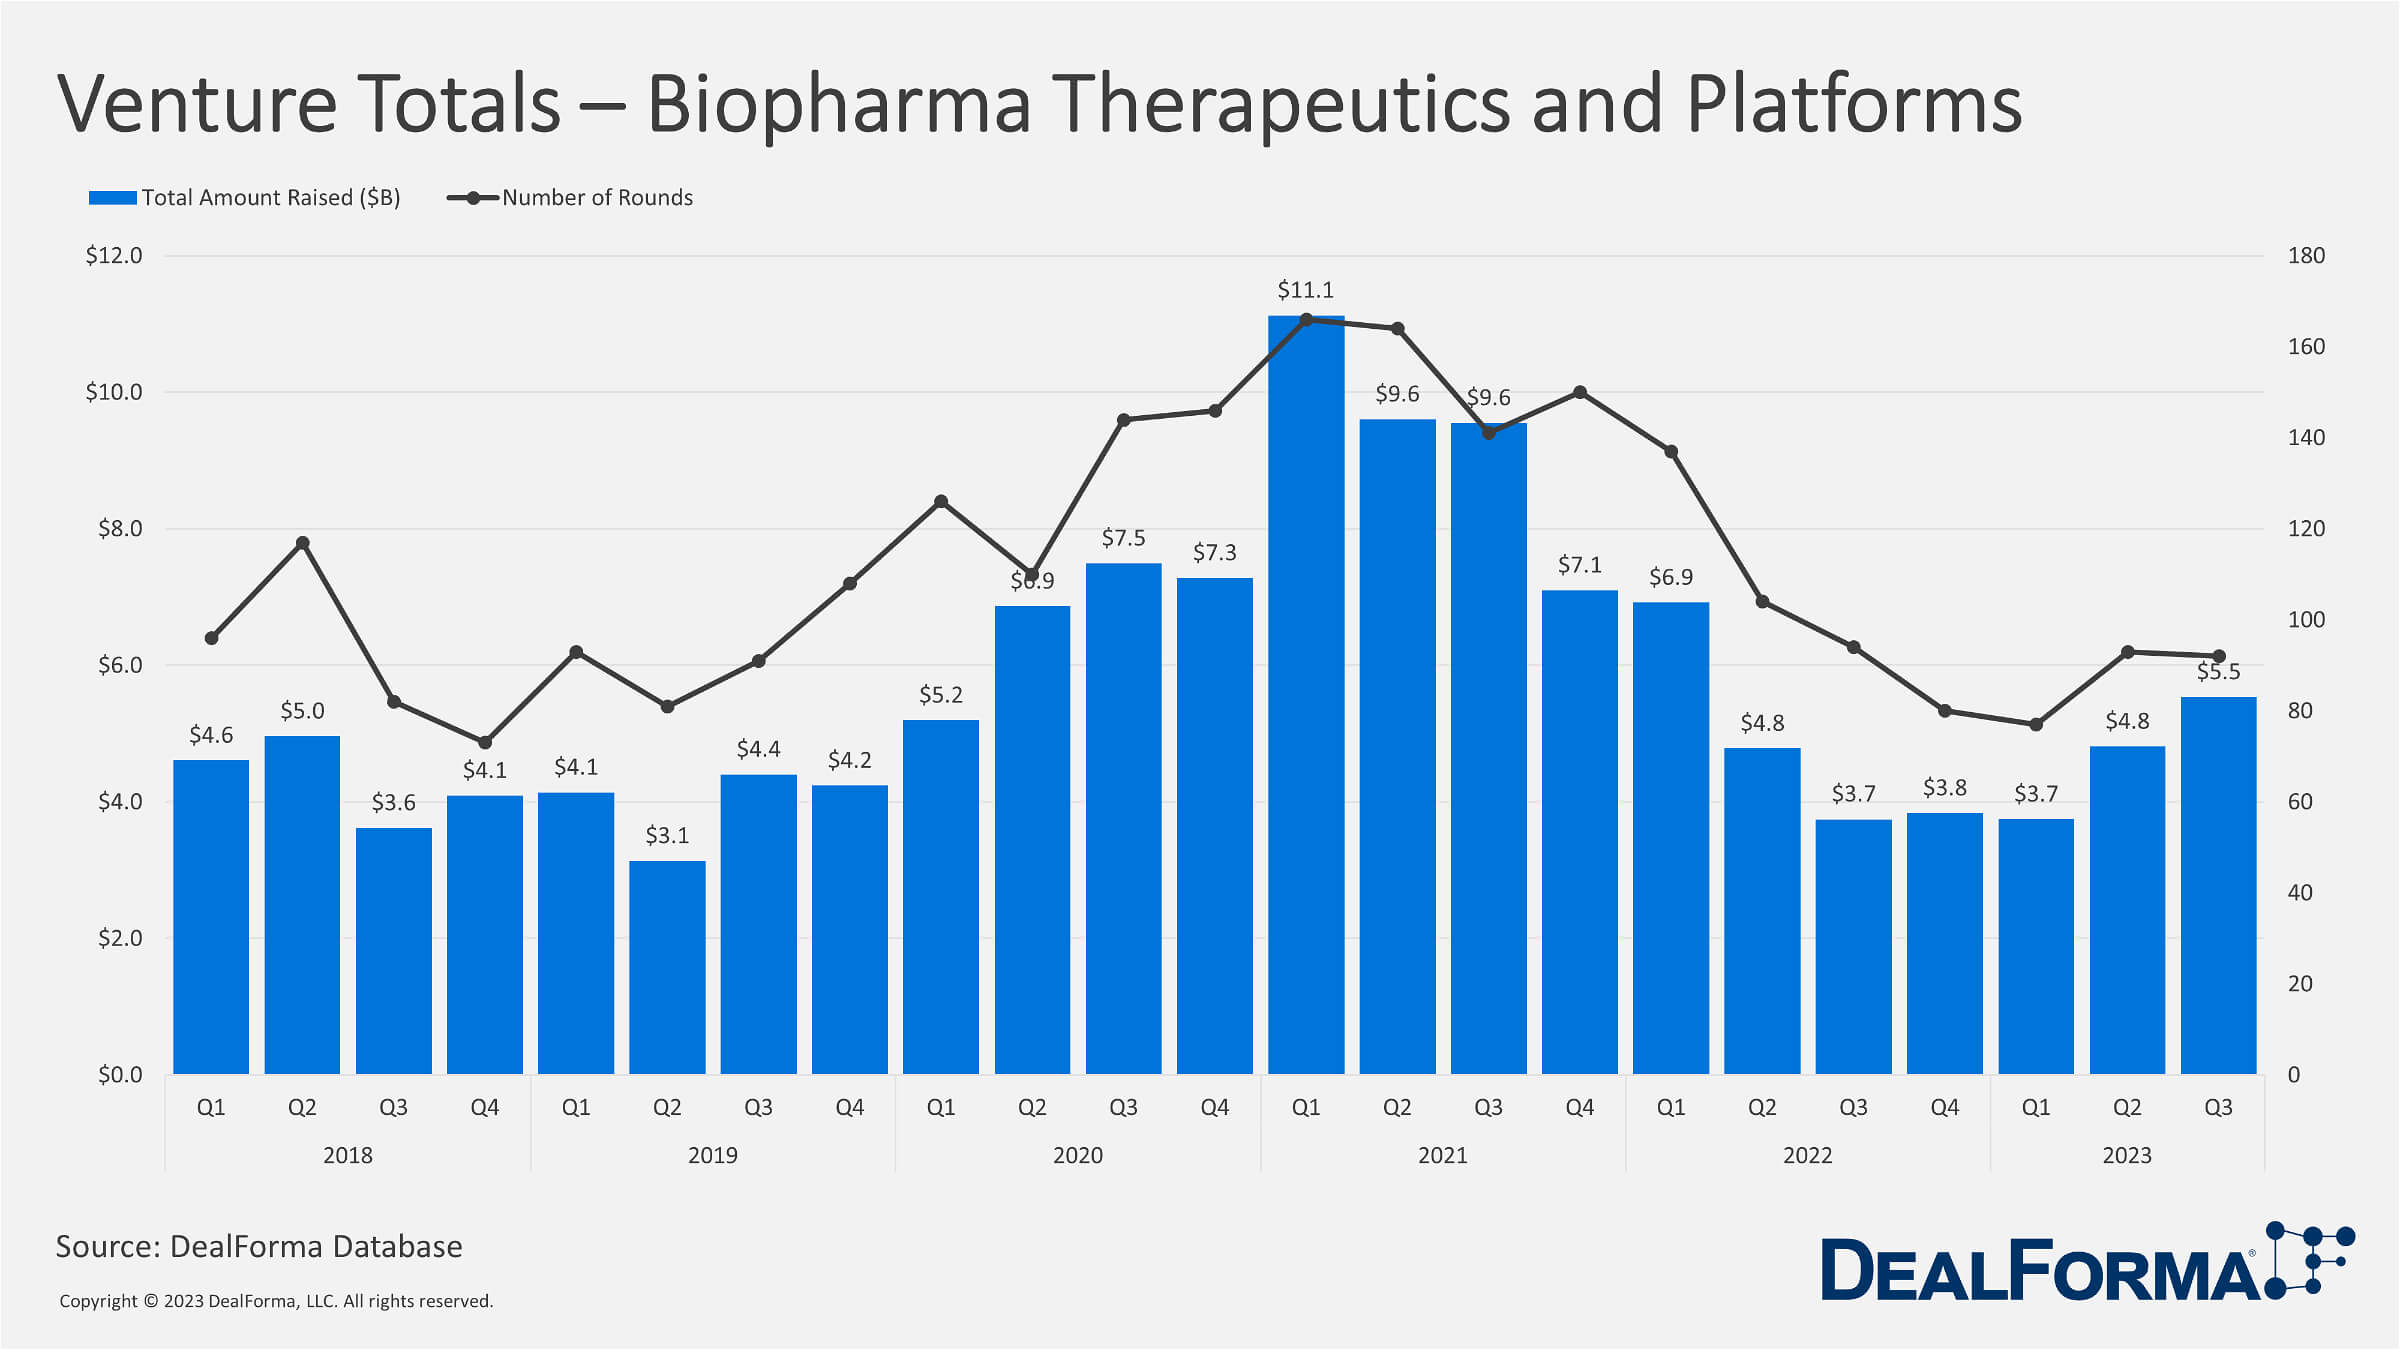 Ventura Totals Biopharma Therapeutics and Platforms